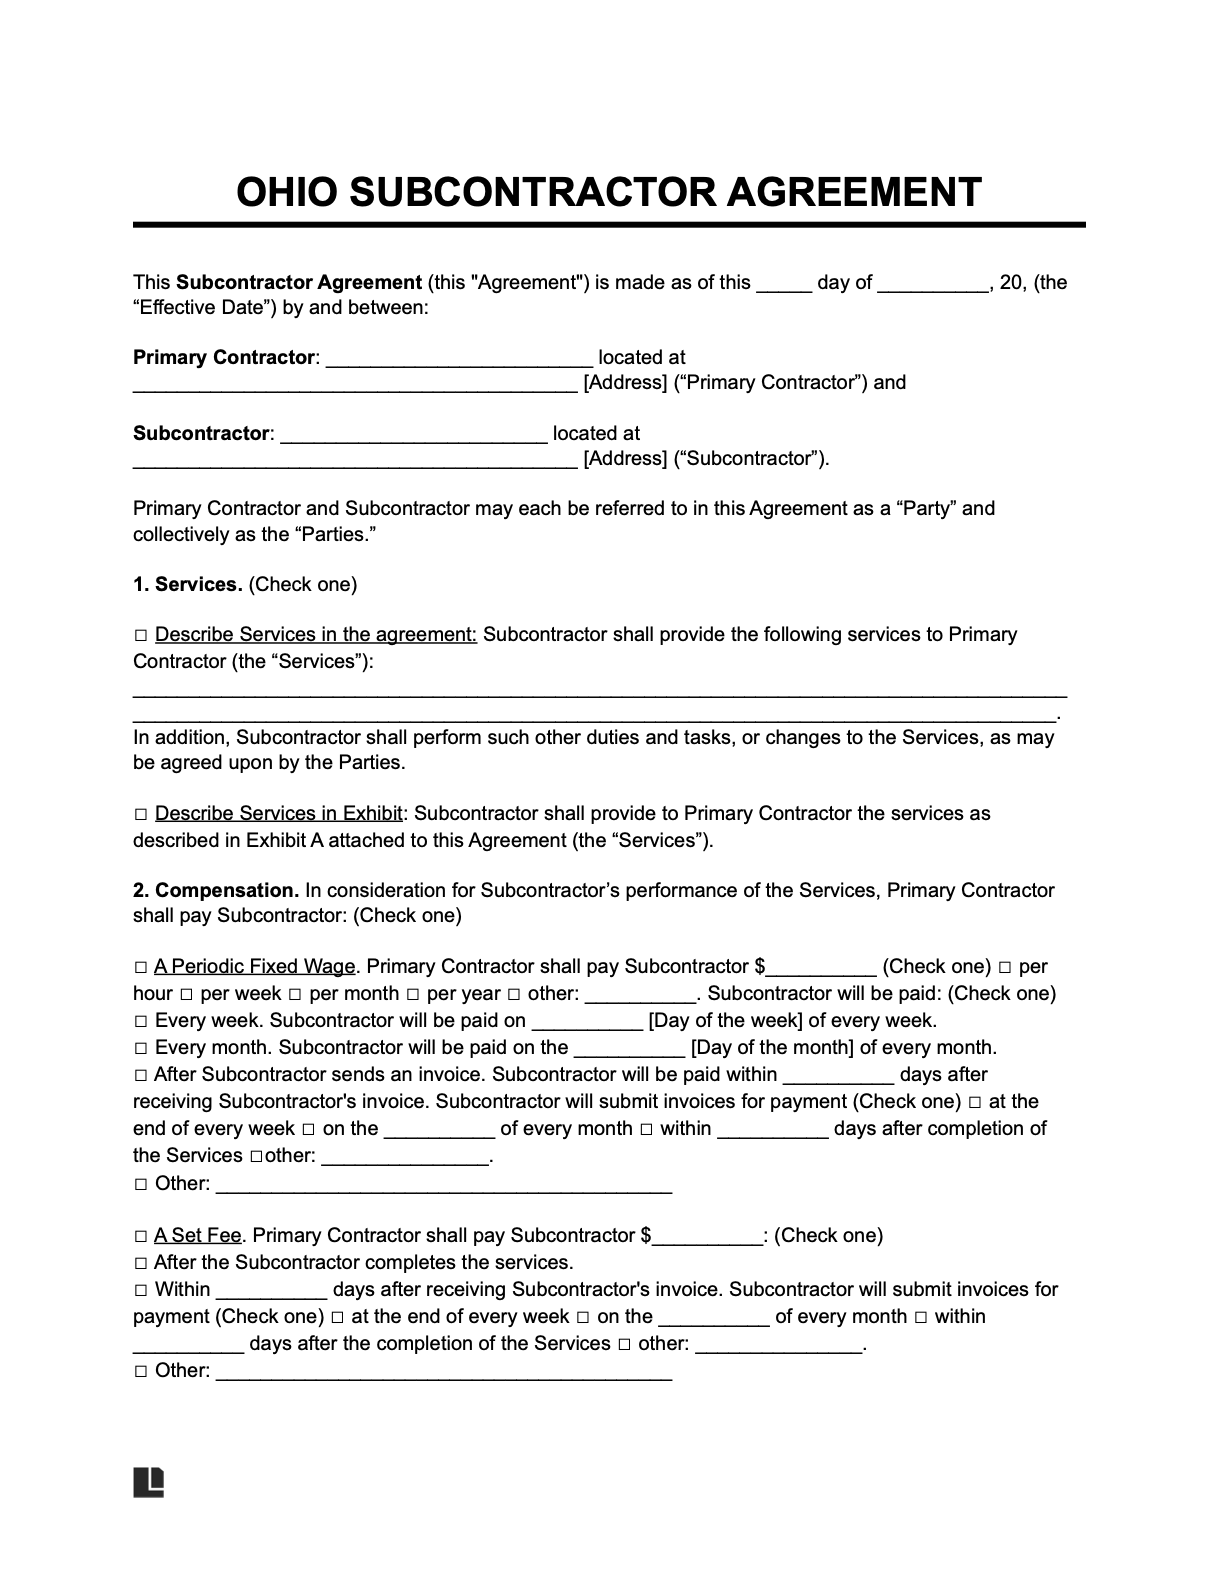 ohio subcontractor agreement template